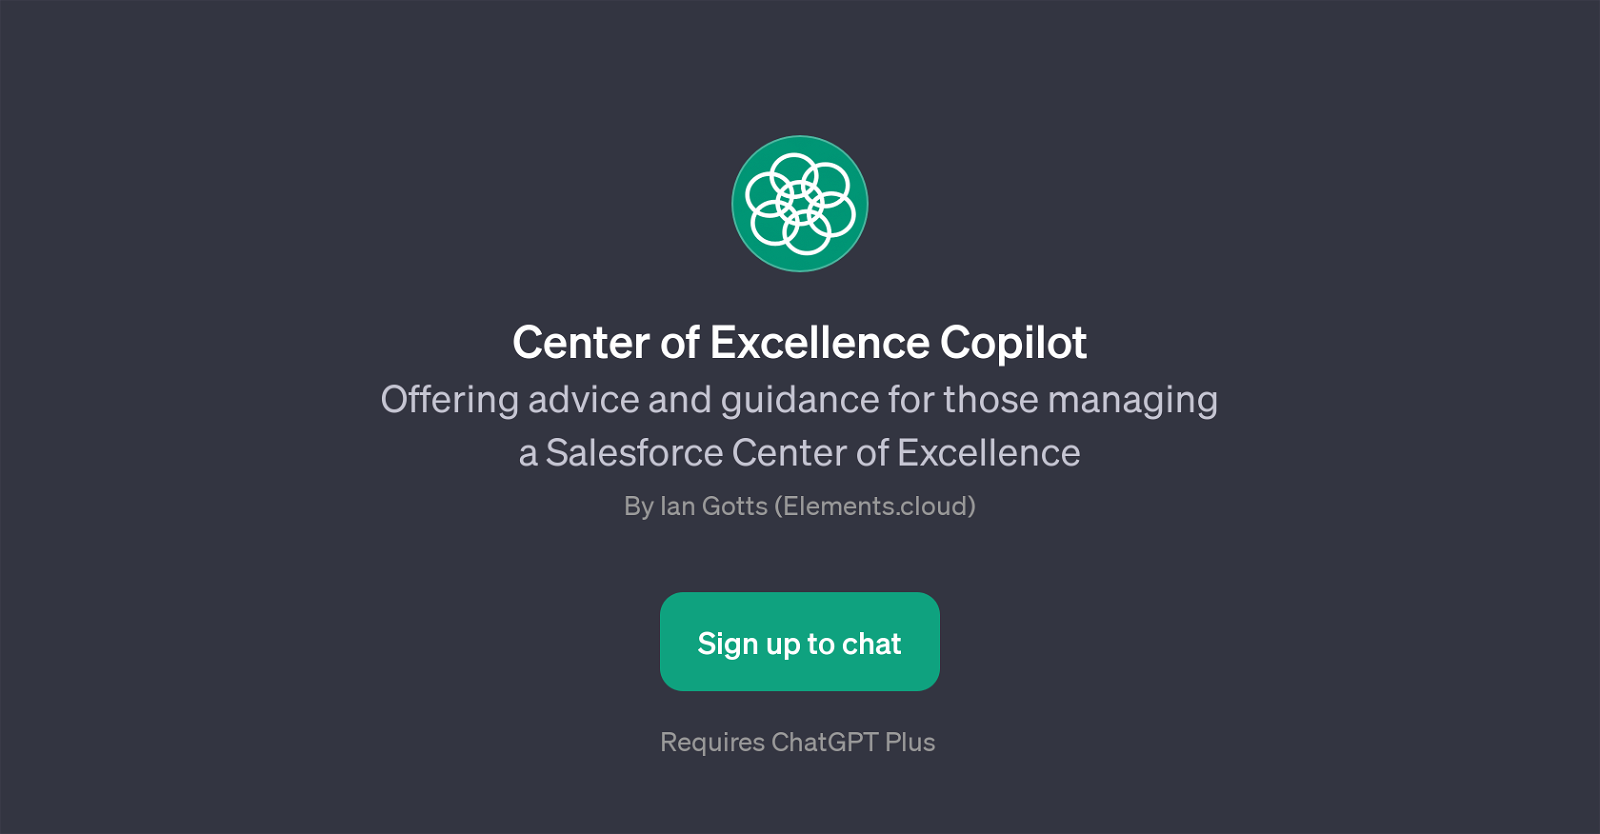 Center of Excellence Copilot website